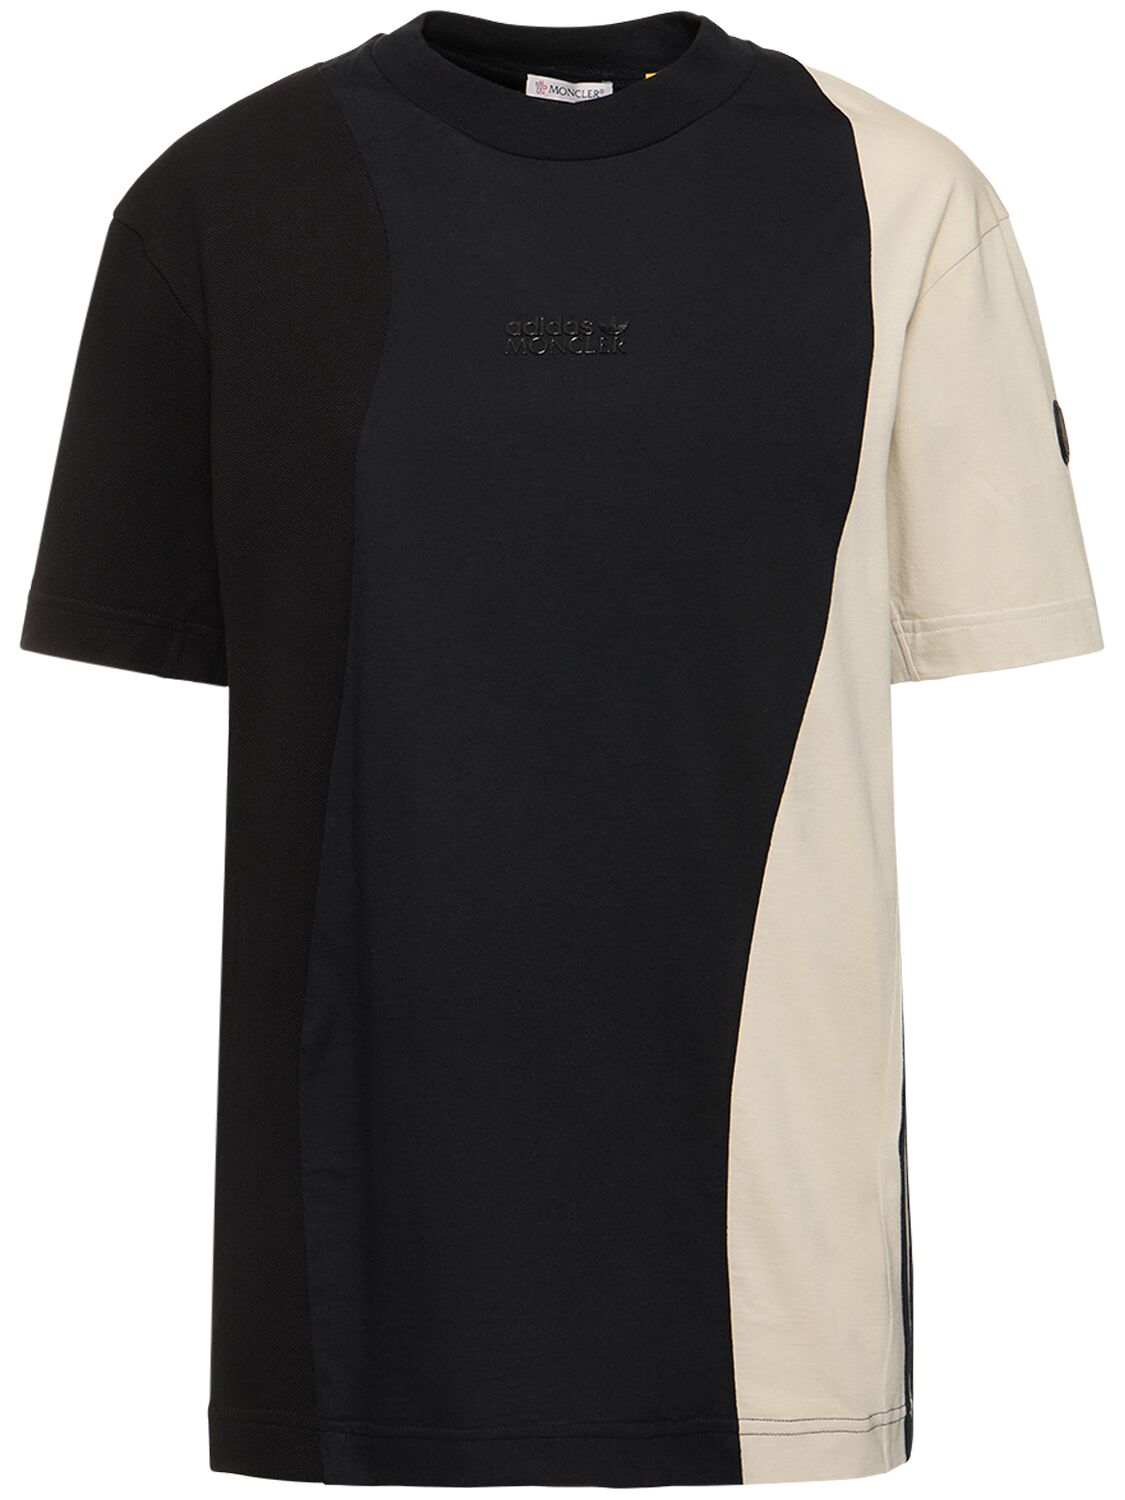 Moncler Genius Moncler X Adidas棉质t恤 In Black,grey